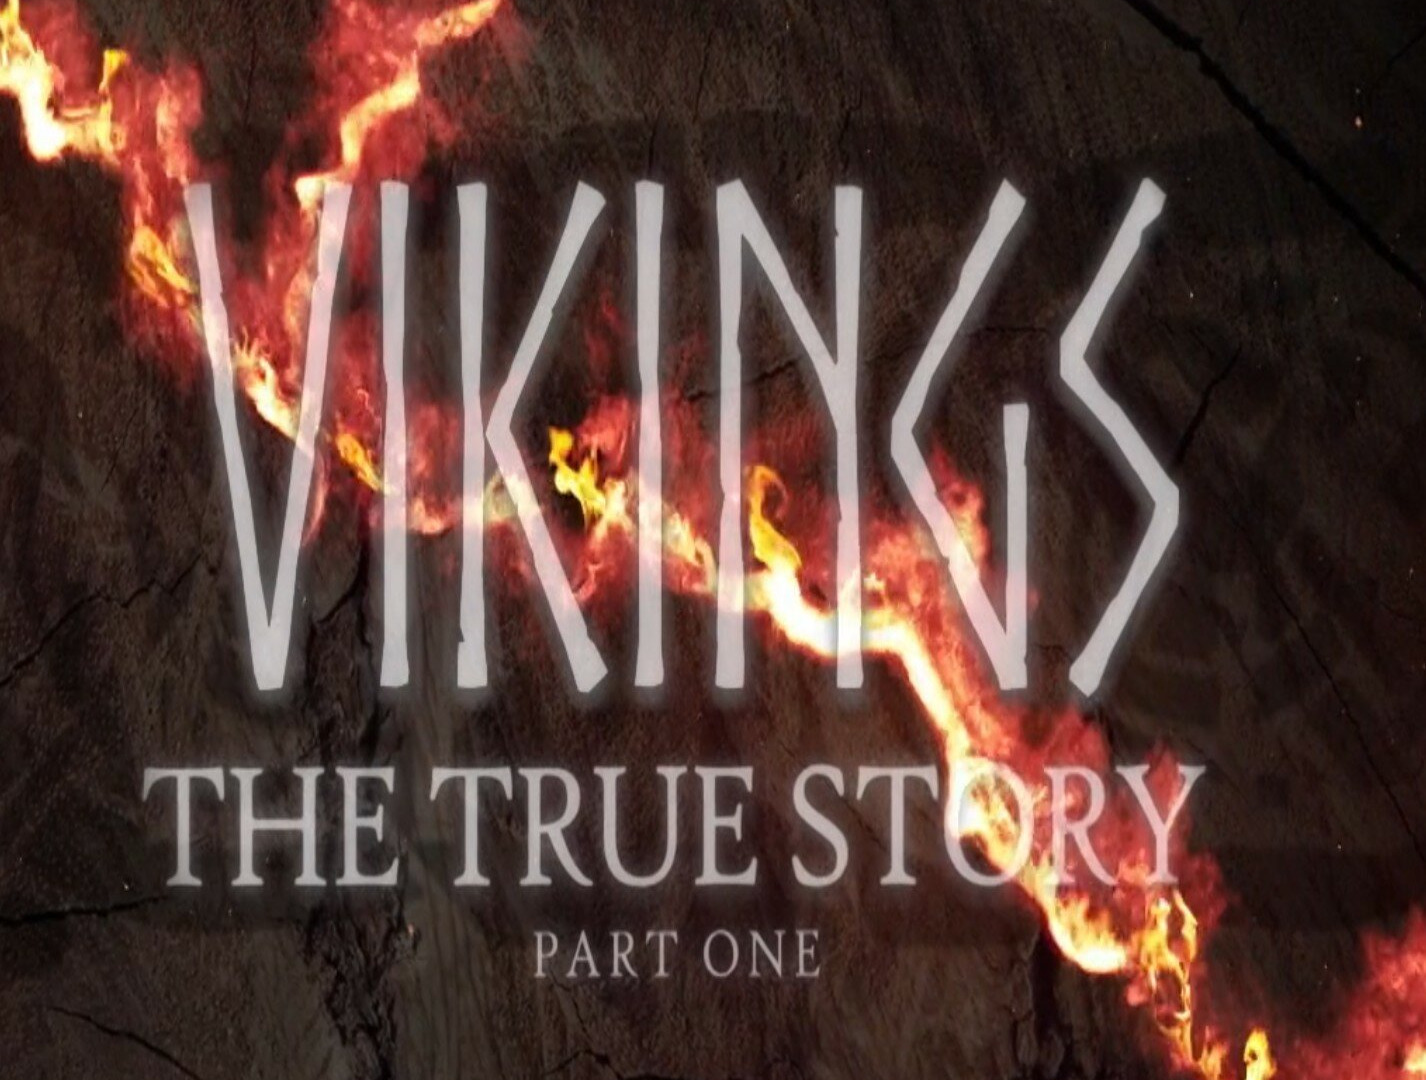 Show Vikings: The True Story